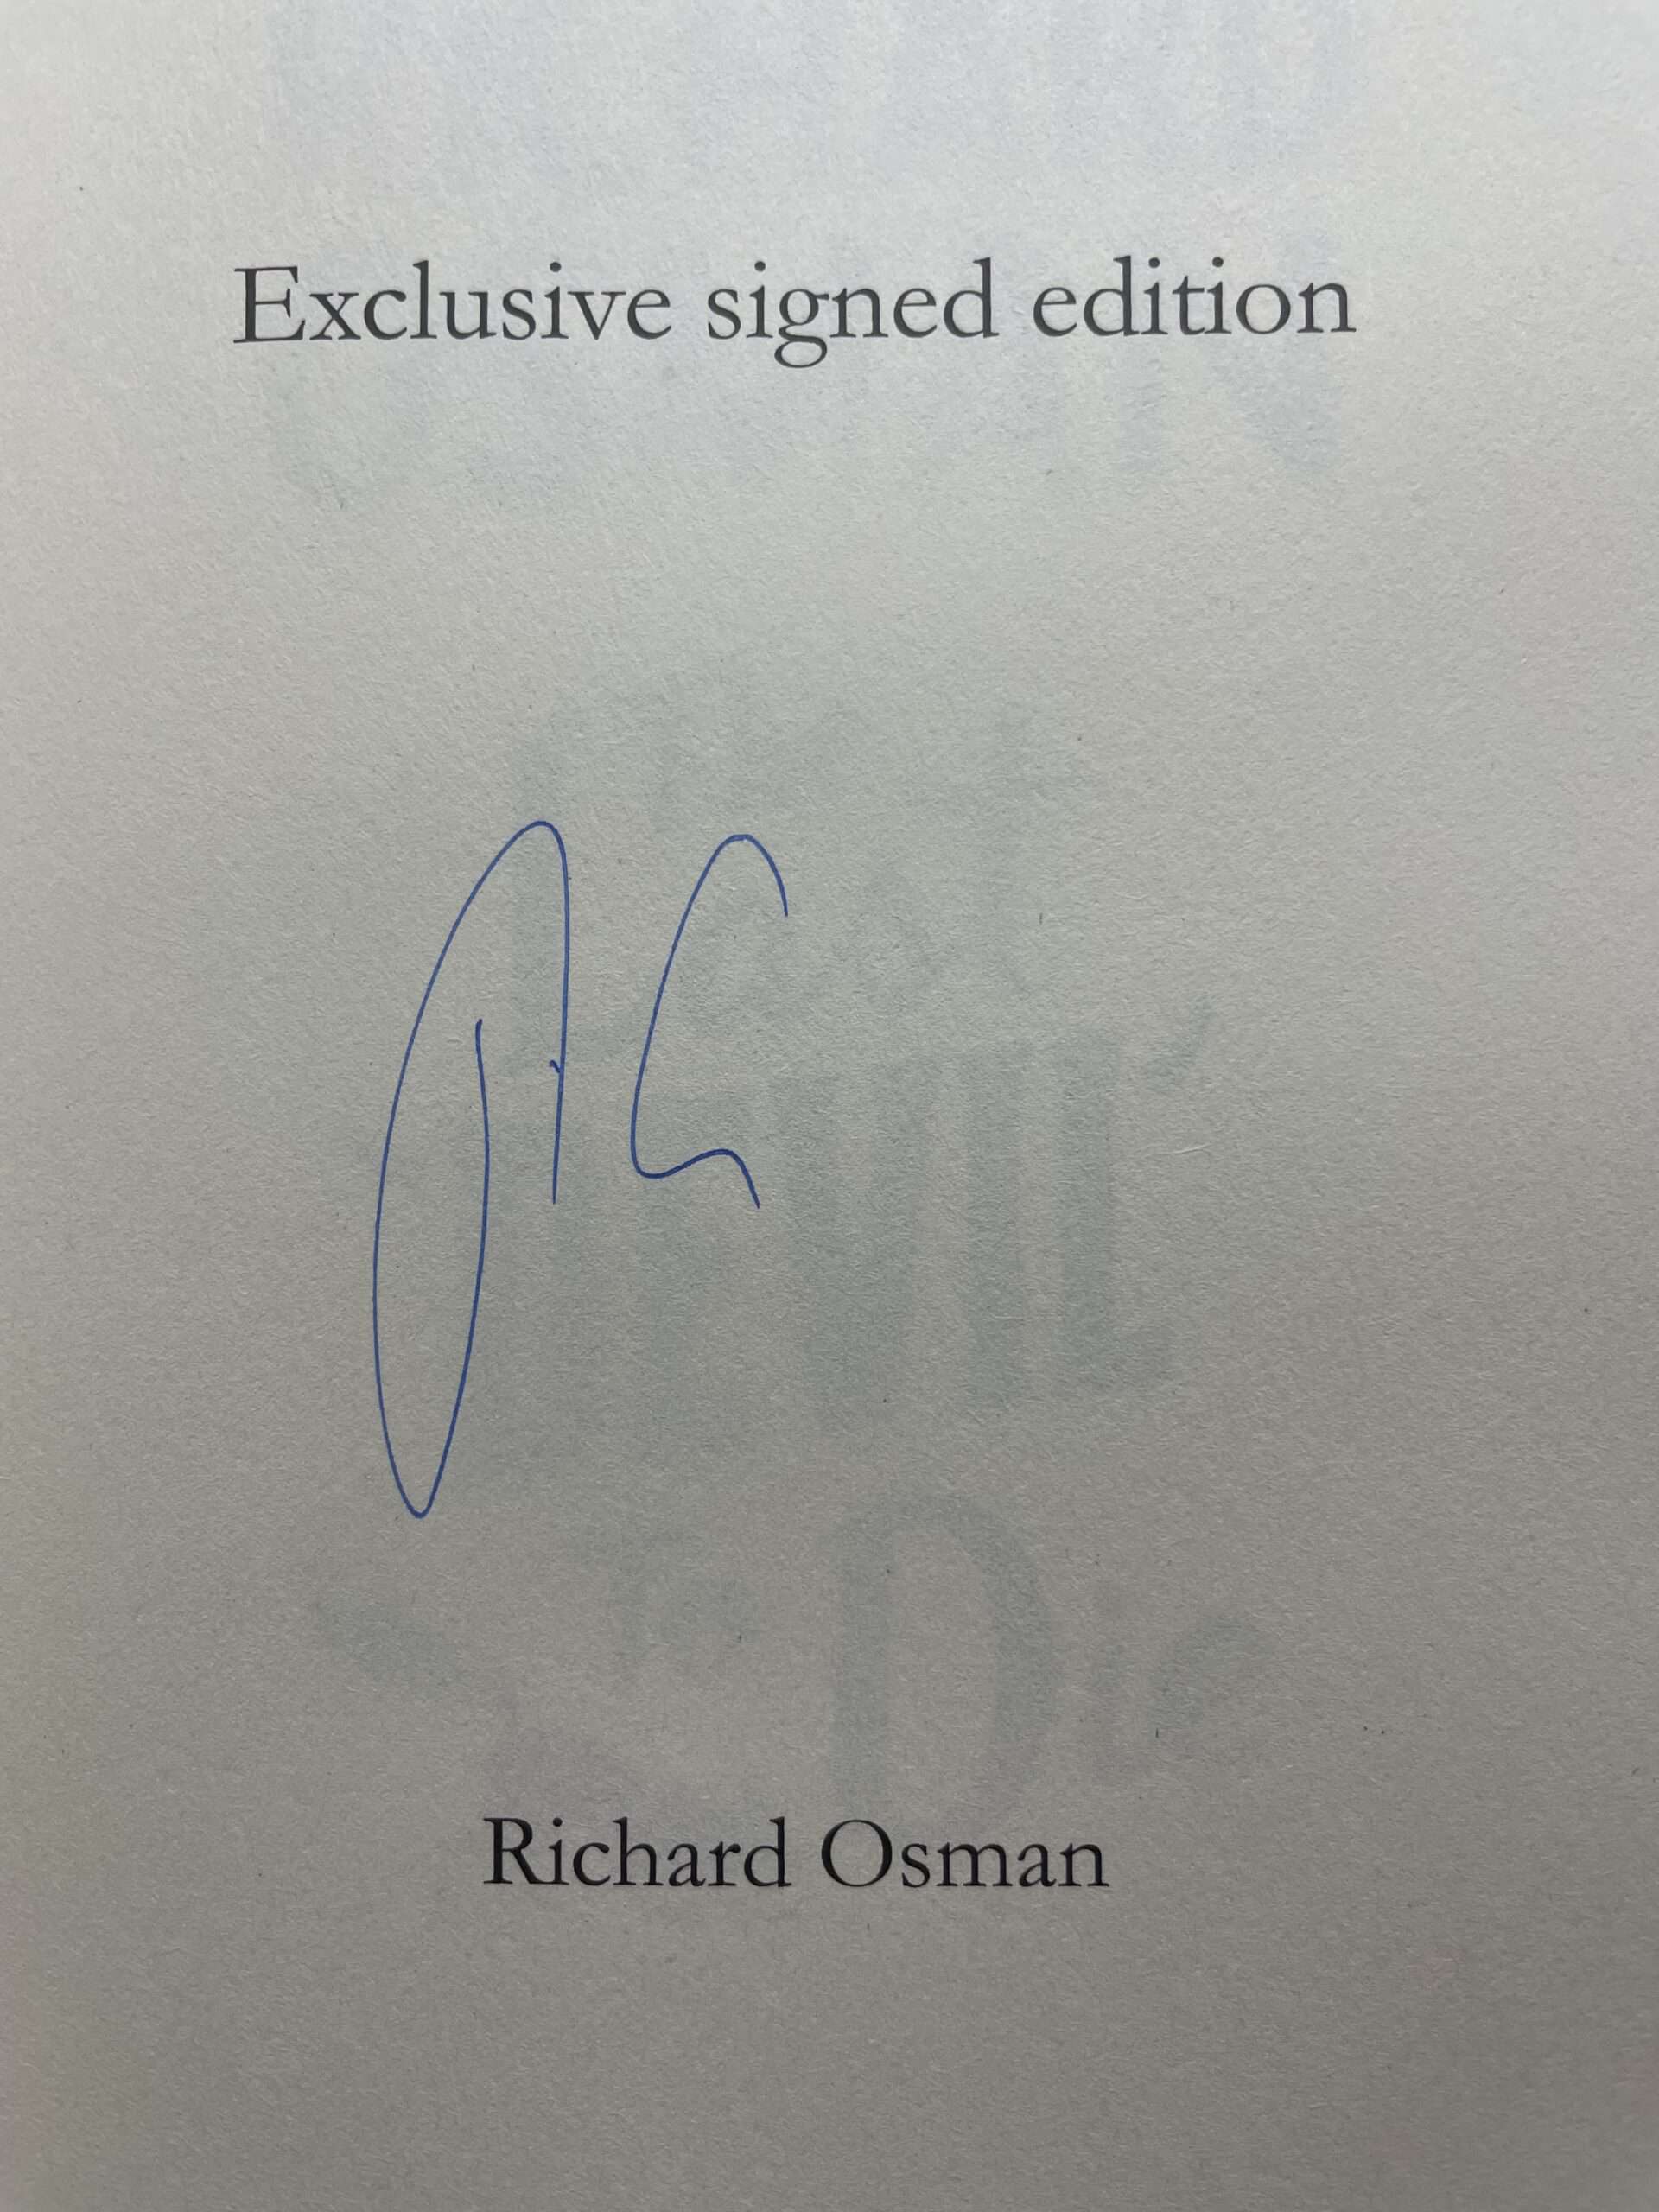 richard osman 4 first signed books 8